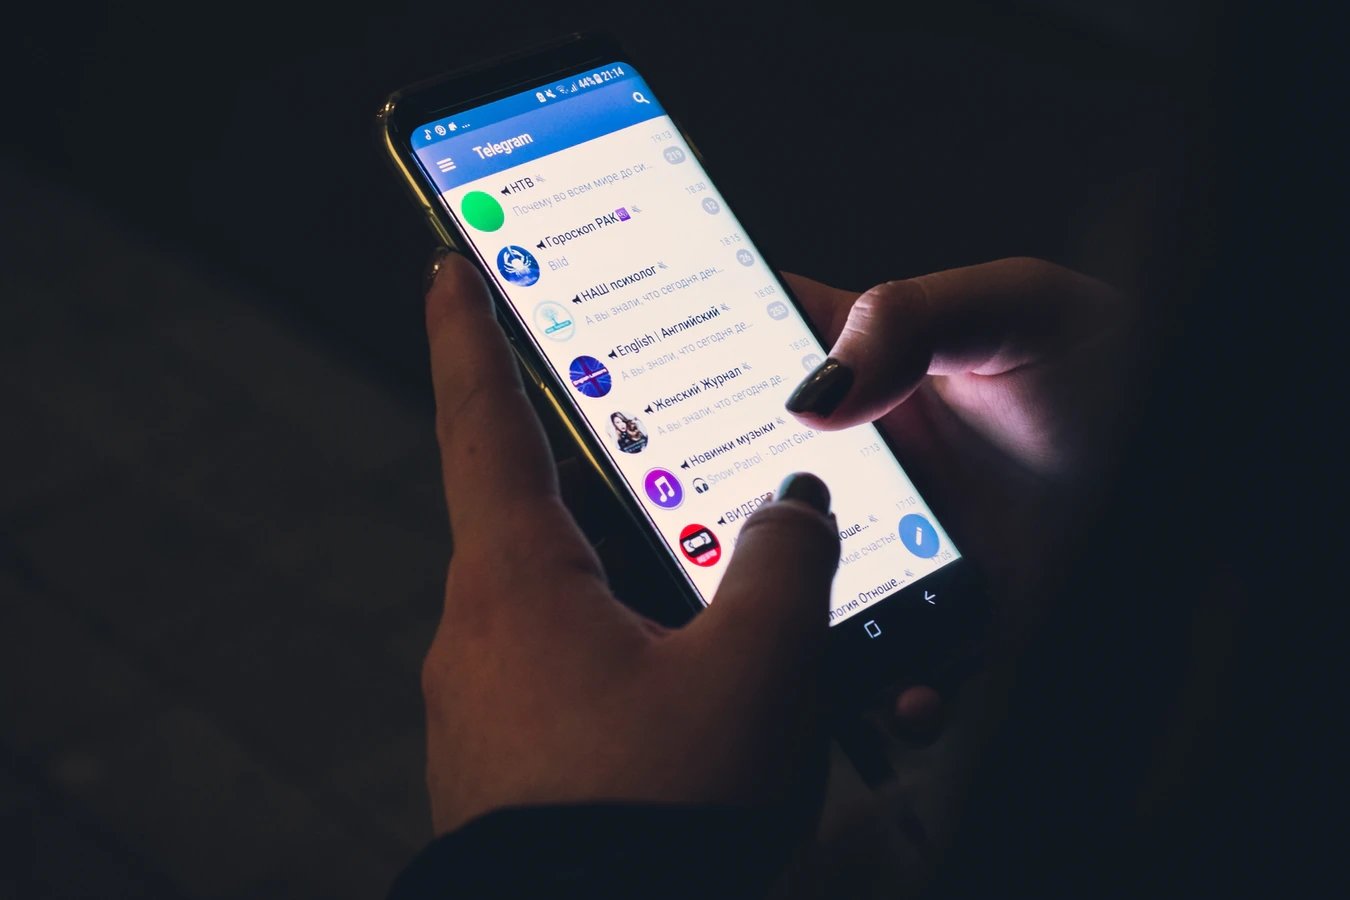 Telegram app em smartphone